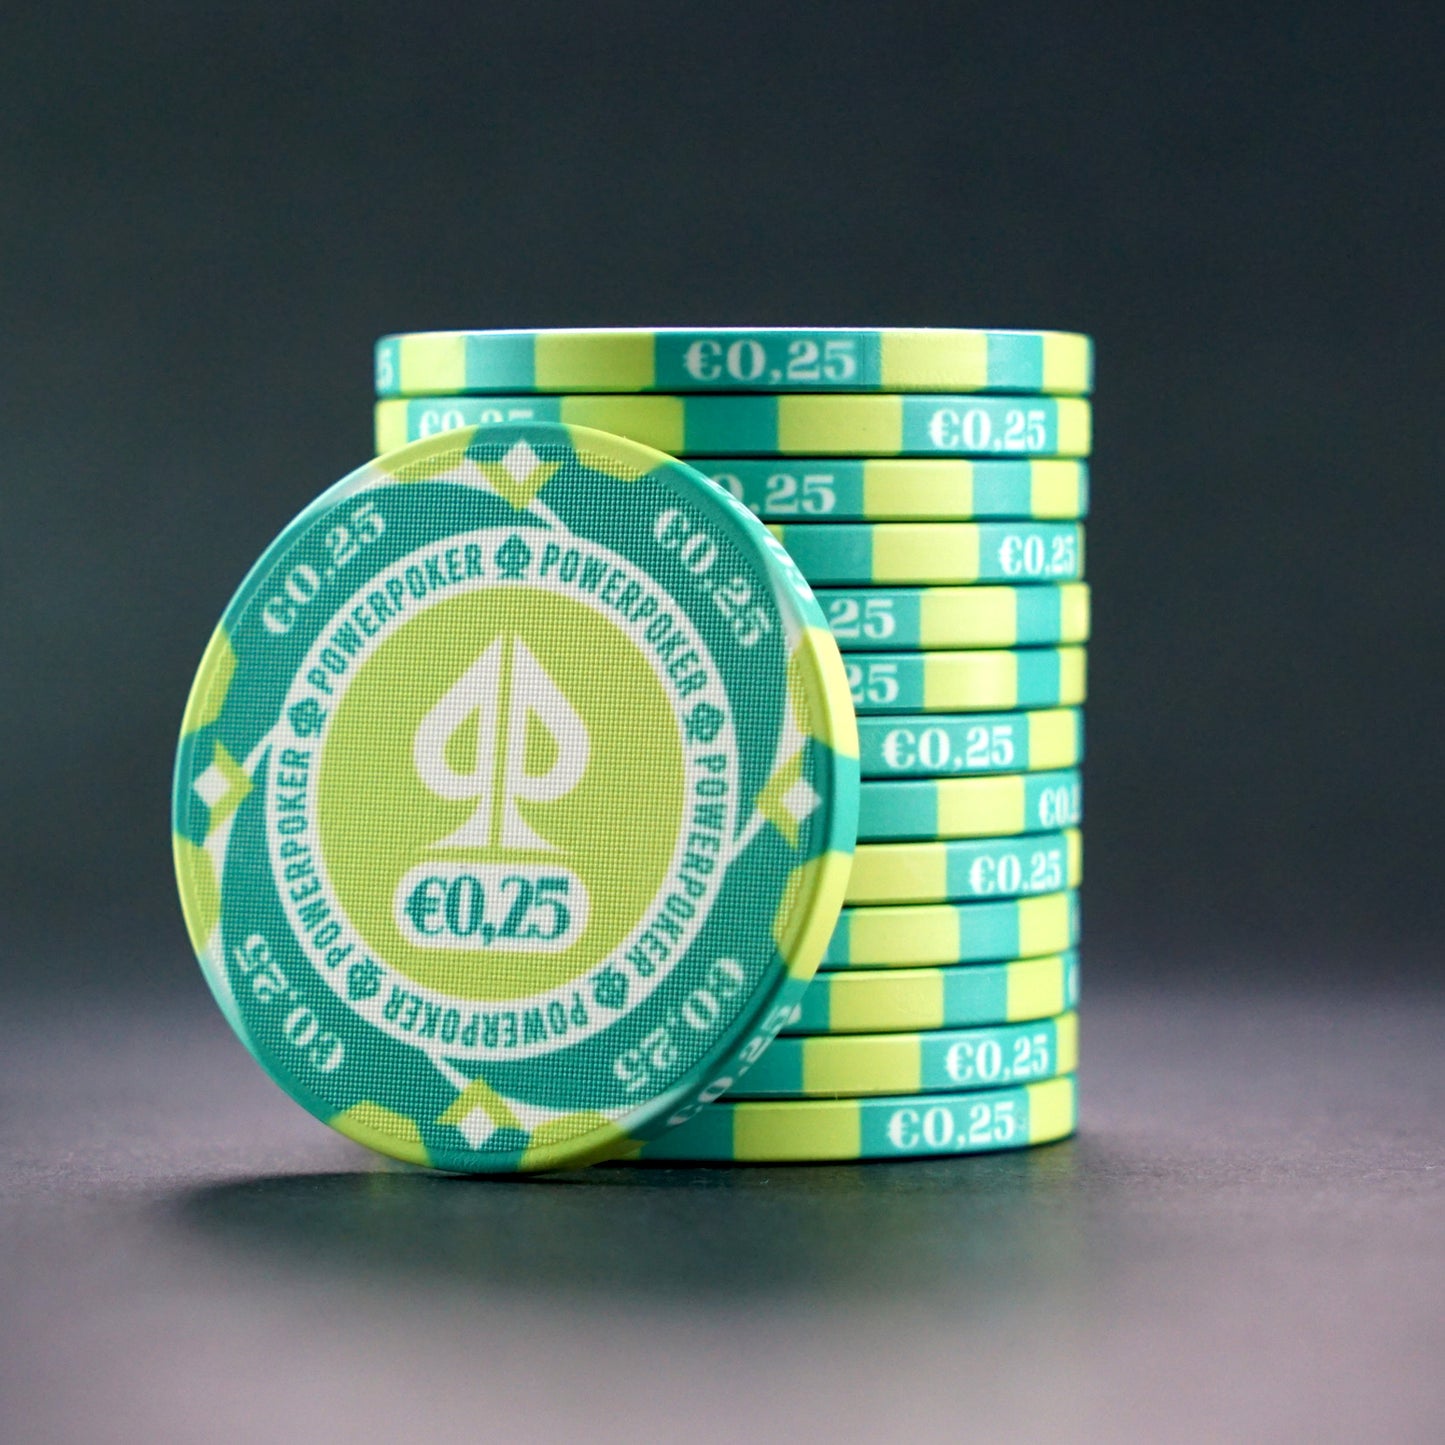 Hurricane Edition 25 - Keramik Pokerchips (25 Stück)